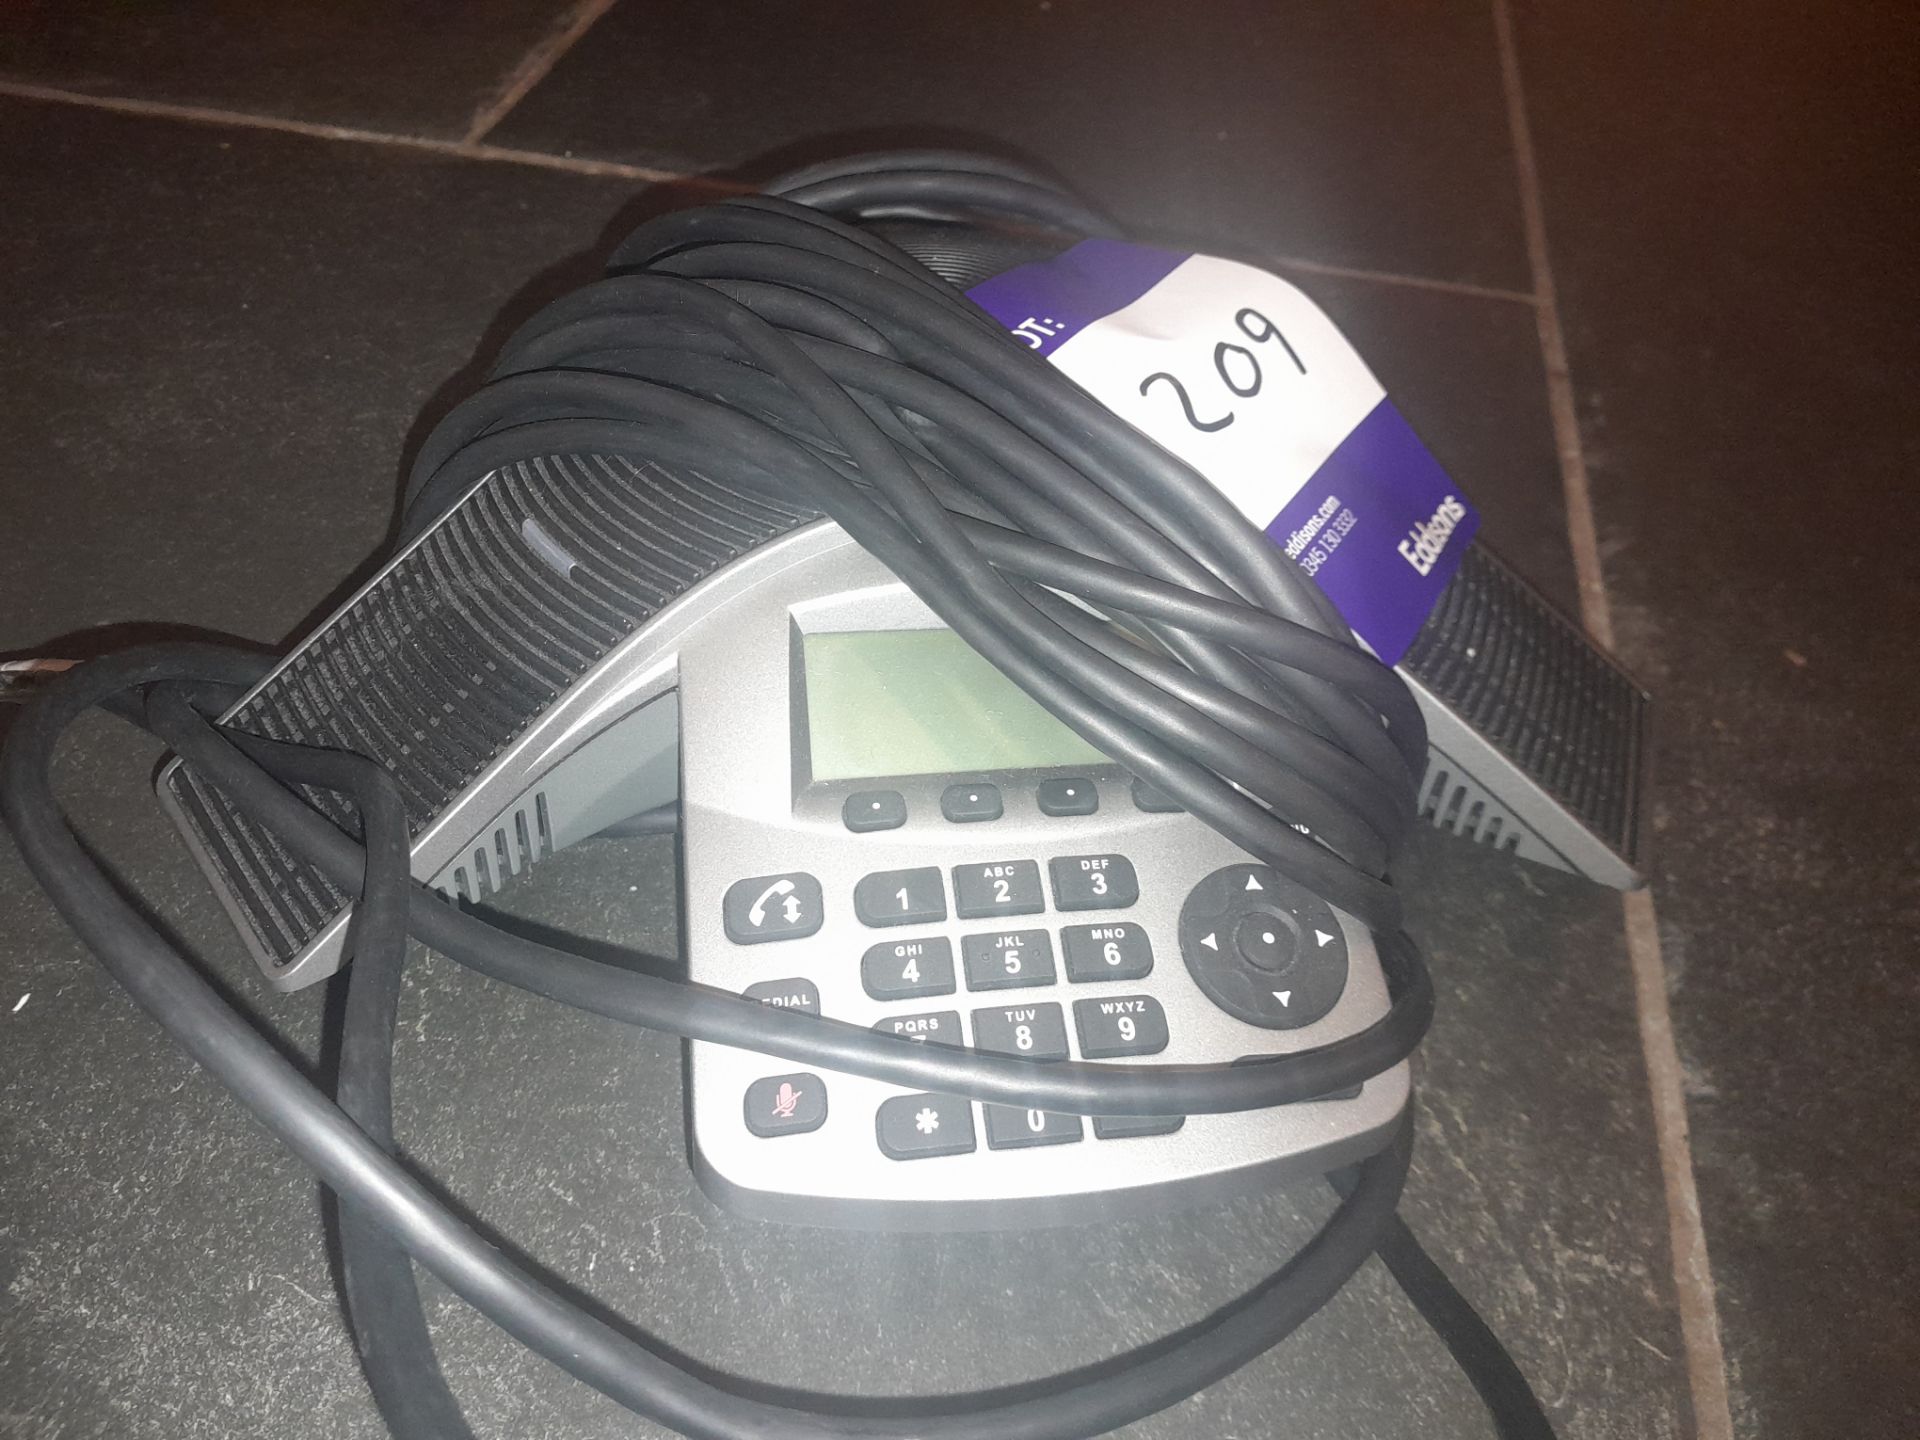 Polycom Soundstation IP5000, conference phone - Image 2 of 2